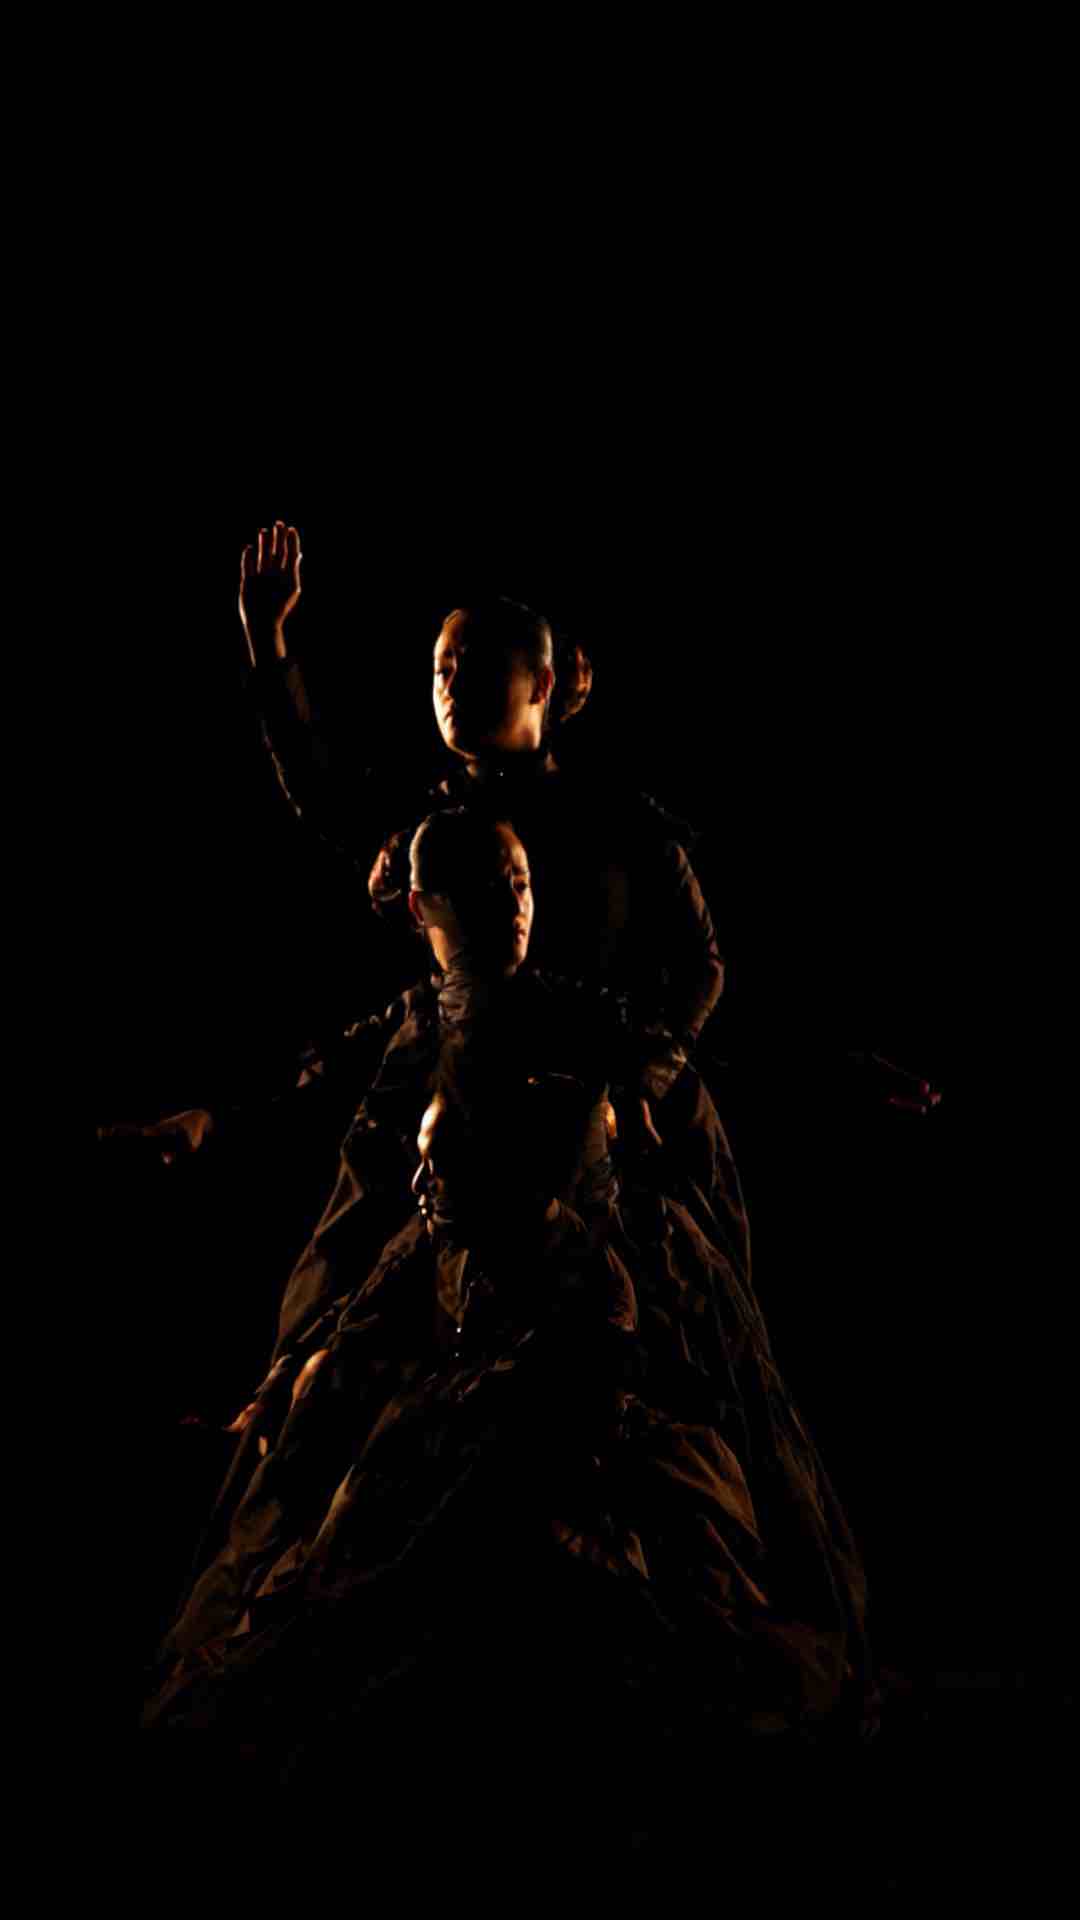 Yuki Kihara, still from video performance 'Siva in Motion' (2012), collection of Auckland Art Gallery, Toi o Tamaki, Auckland, New Zealand © Yuki Kihara and Mitford Galleries, Dunedin, New Zealand